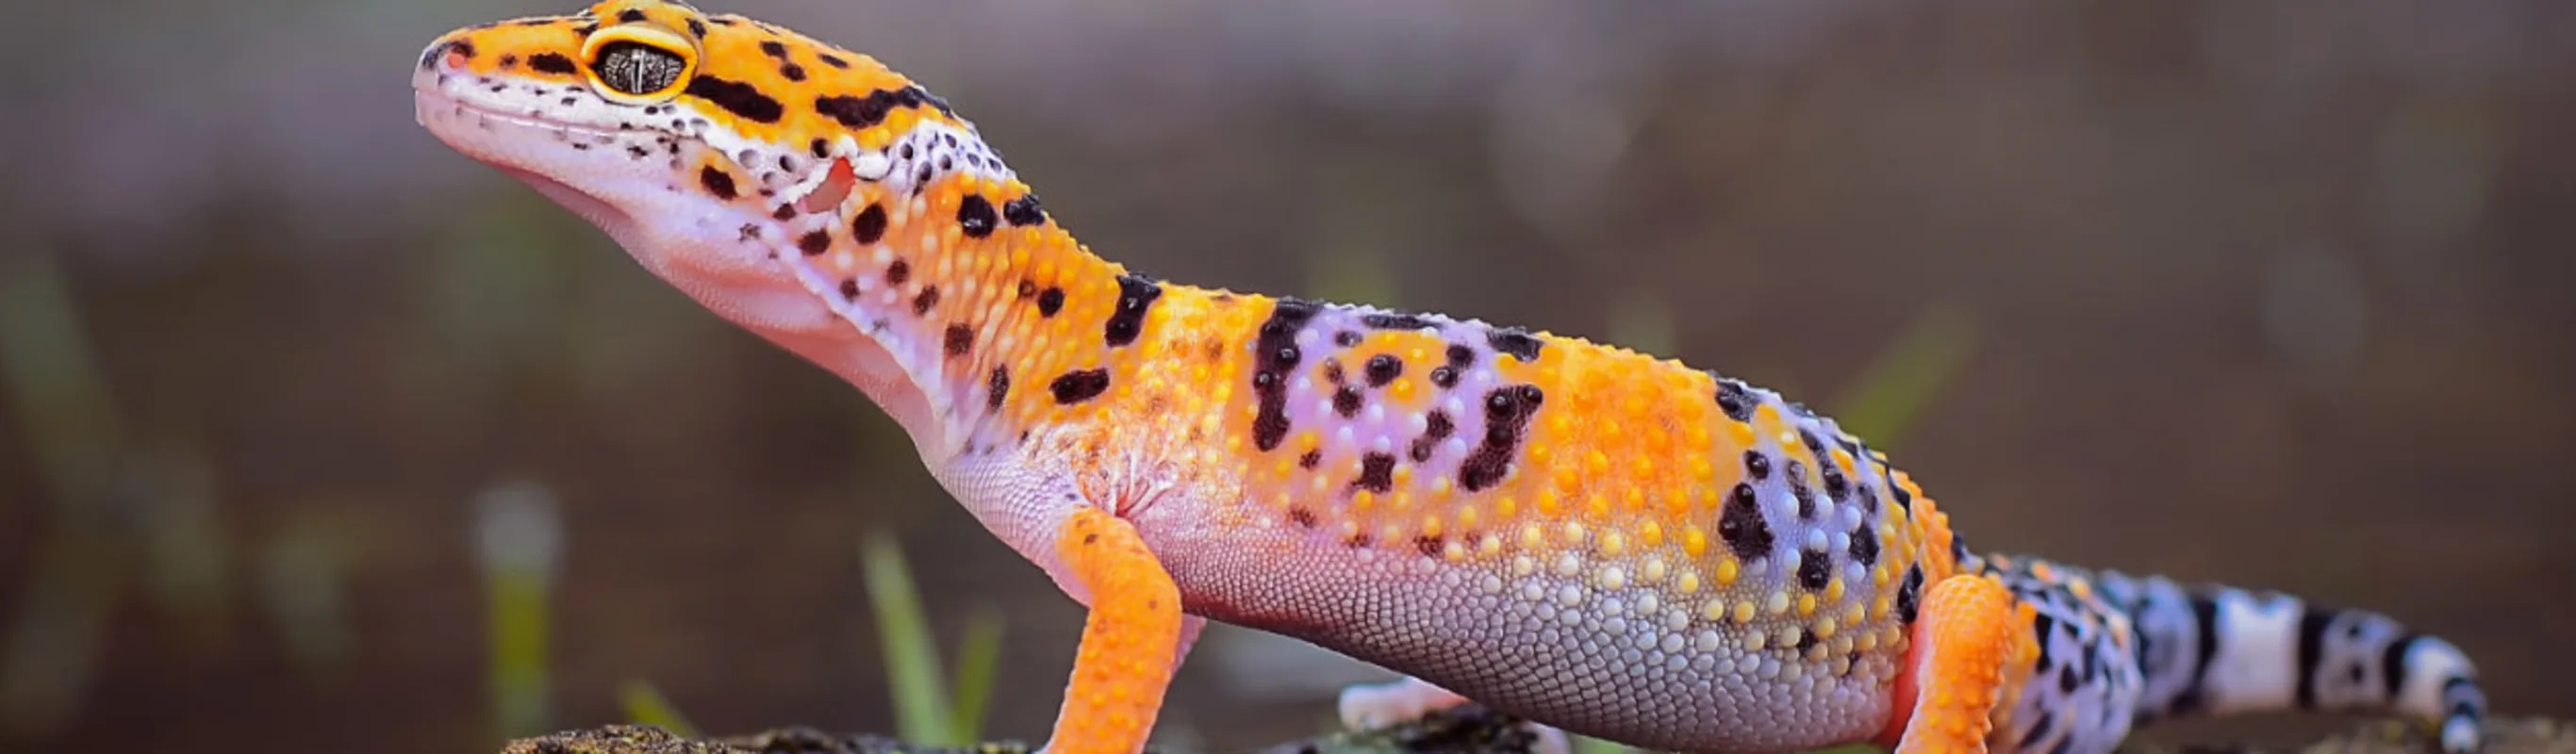 A Leopard Gecko on a Branch